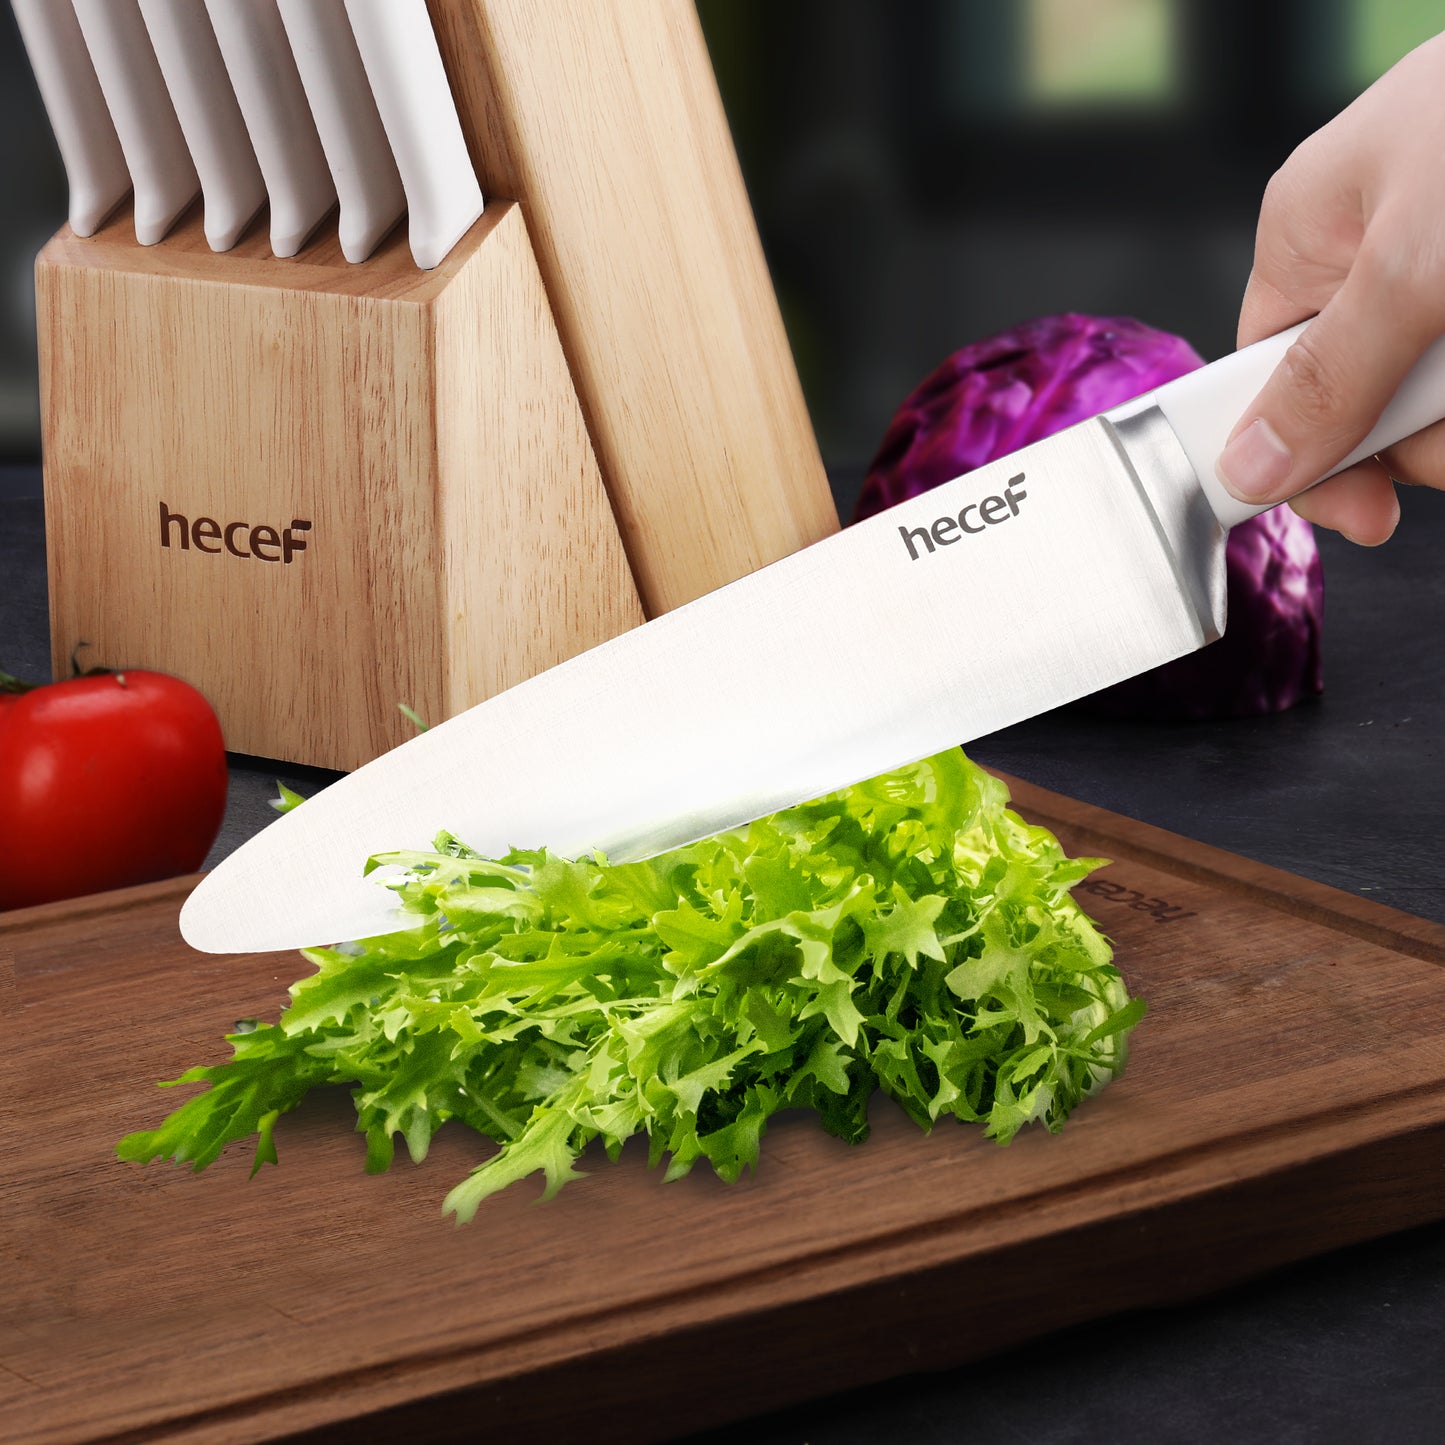 Hecef 15 PCS White Kitchen Knife Set with Wooden Block, Stainless Steel Ultra Sharp Kitchen Knife Set with 6 PCS Steak Knives, Meat Scissors, Sharpener Steel, Red Dot Design Award Winner 2022 - Hecef Kitchen